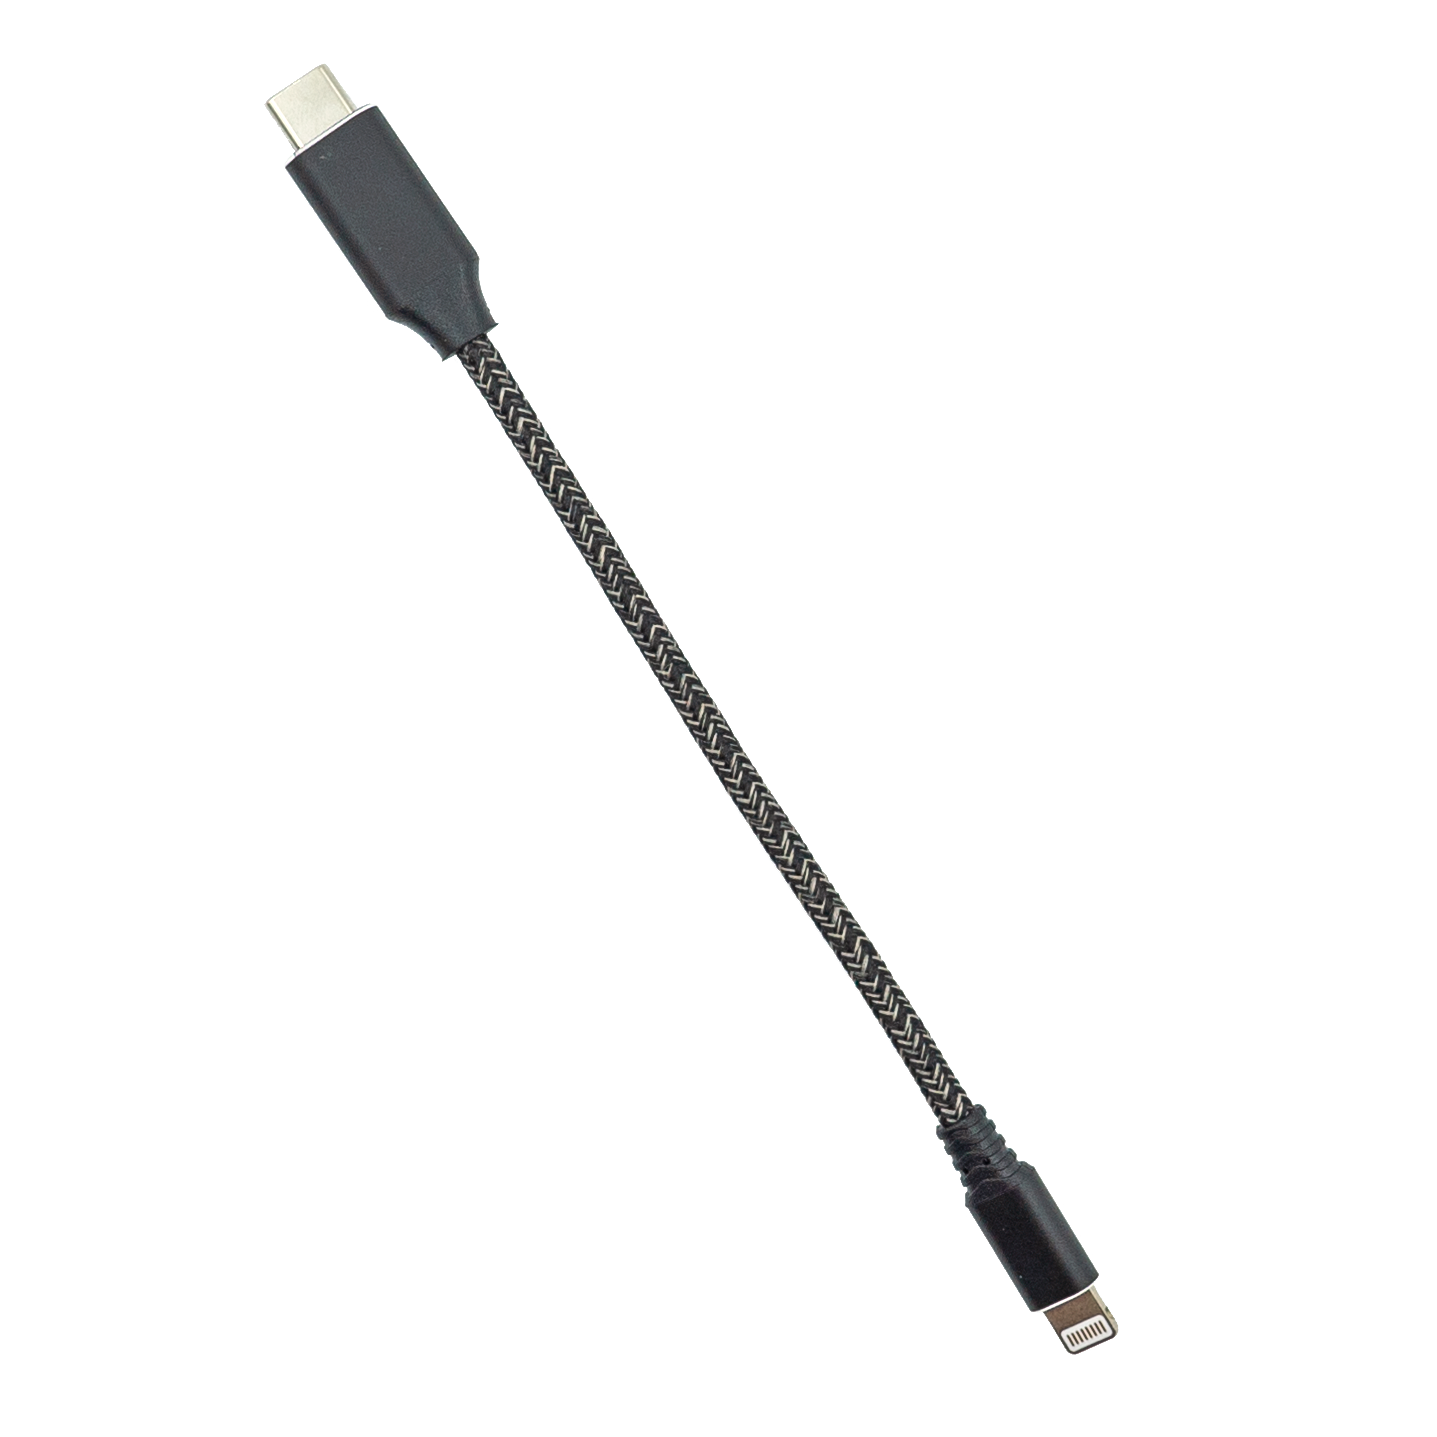 OTG Lightning Audio Cable (15cm)